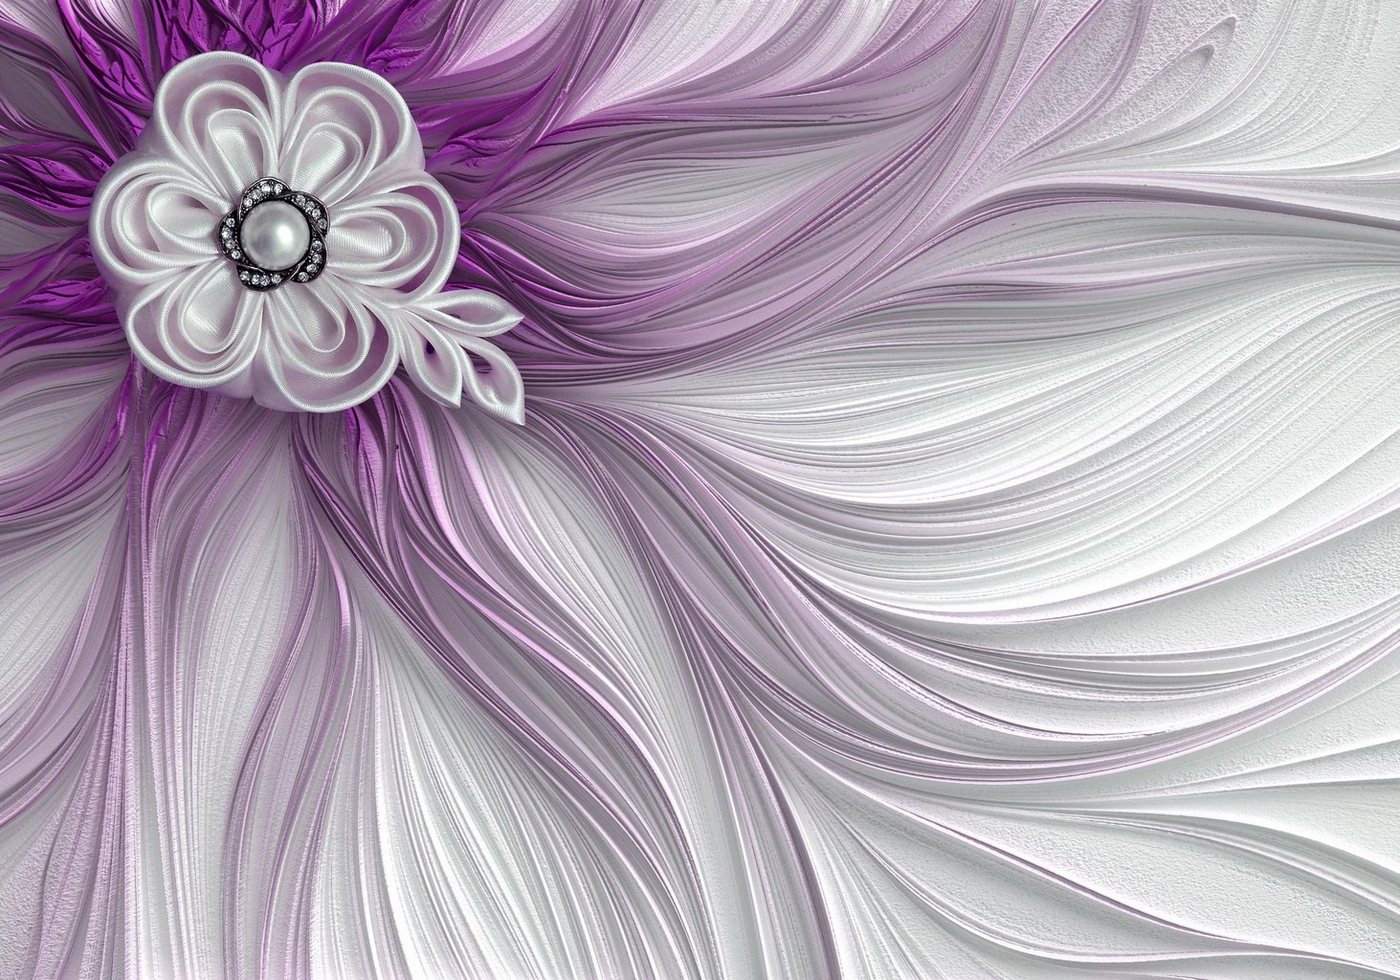 wandmotiv24 Fototapete Perlen violett Blume, glatt, Wandtapete, Motivtapete, matt, Vliestapete, selbstklebend von wandmotiv24